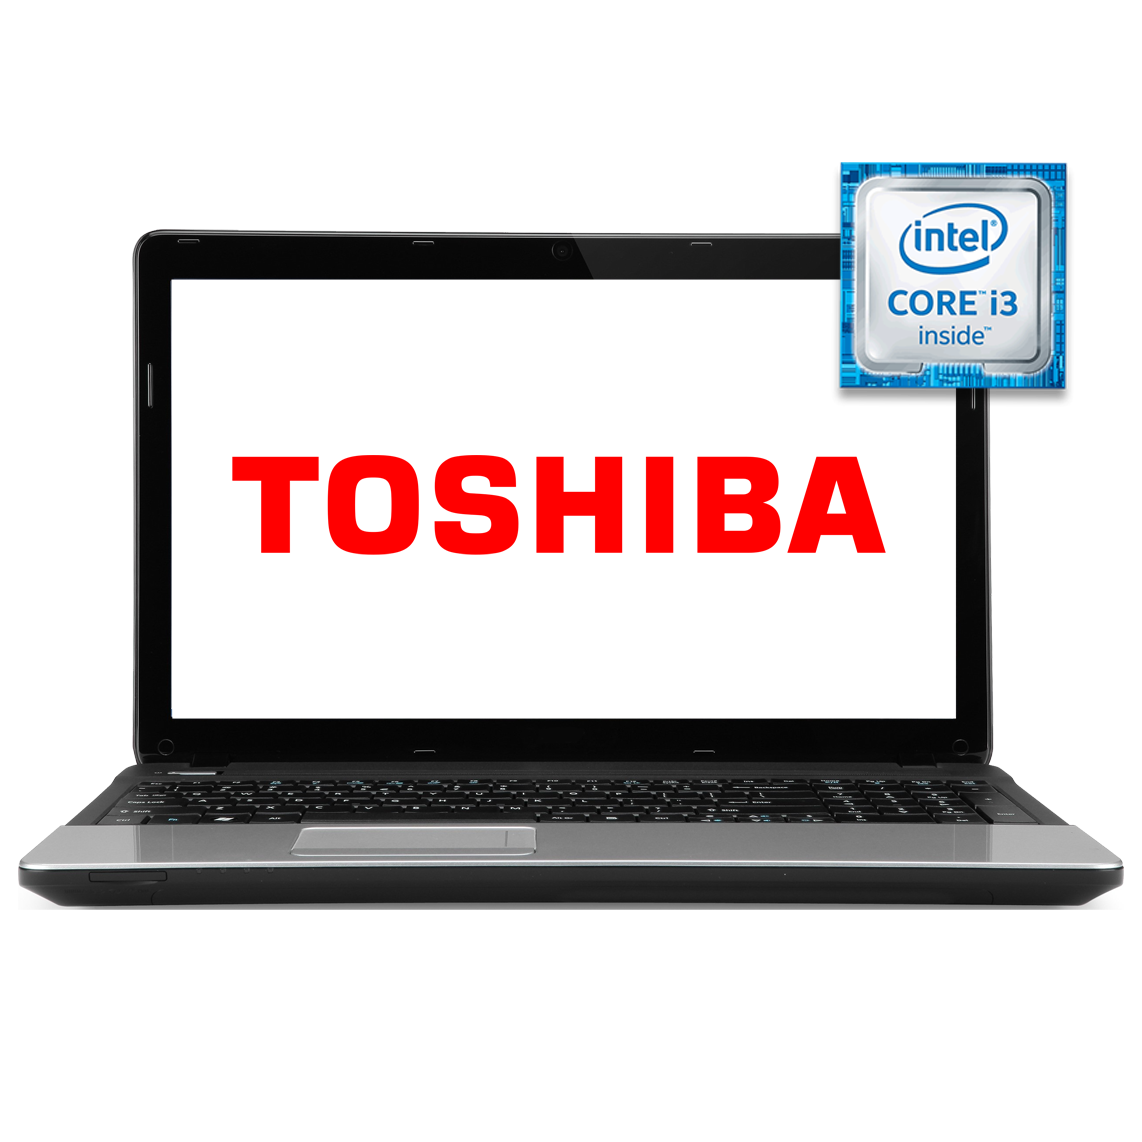 Toshiba - 13.3 inch Core i3 2nd Gen